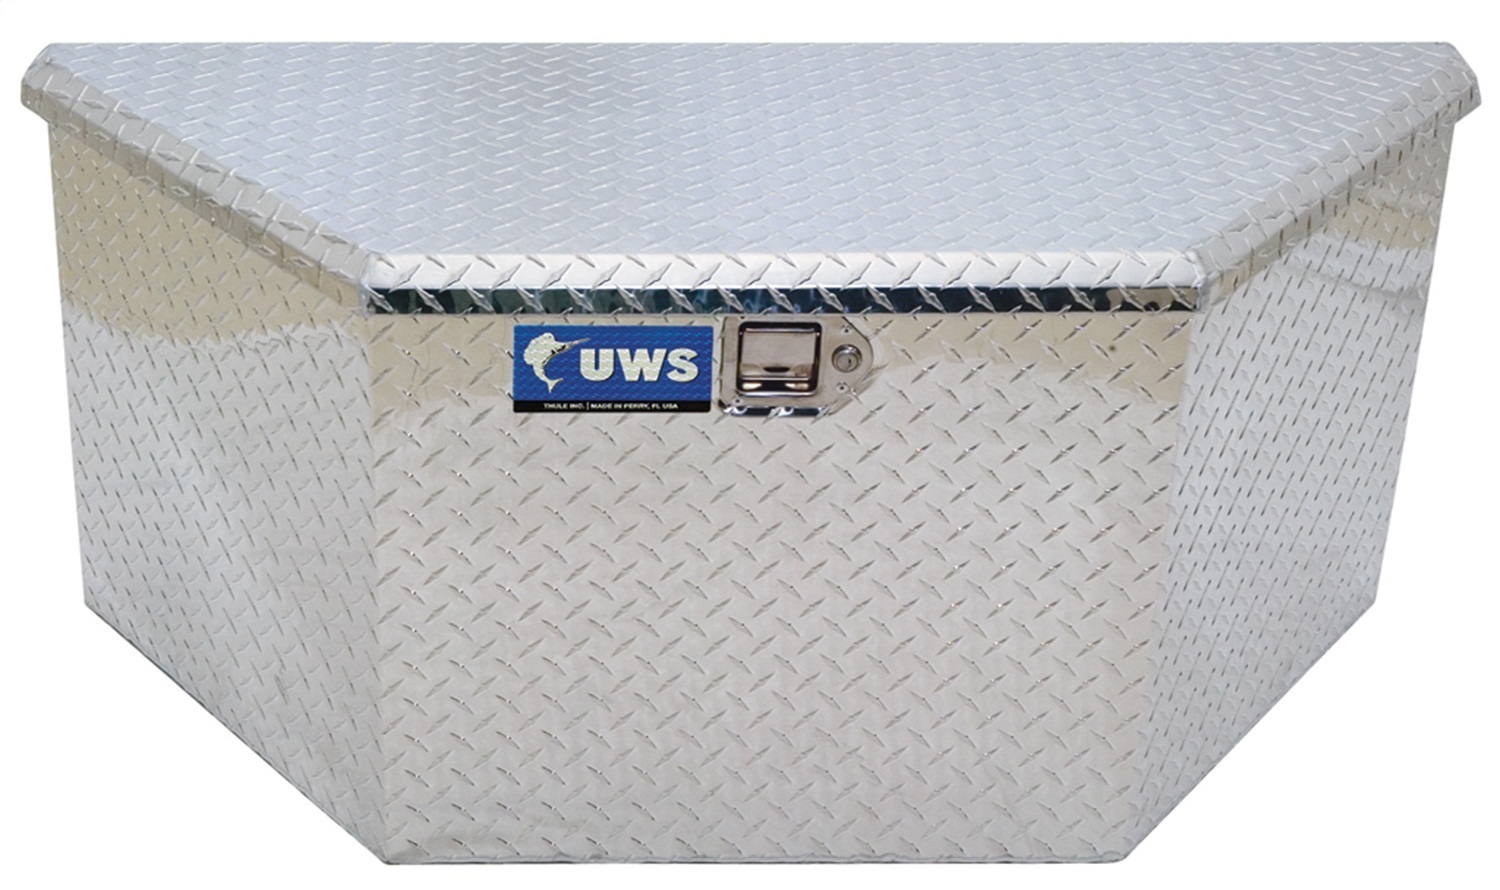 UWS UWS TBV-34 Trailer Box